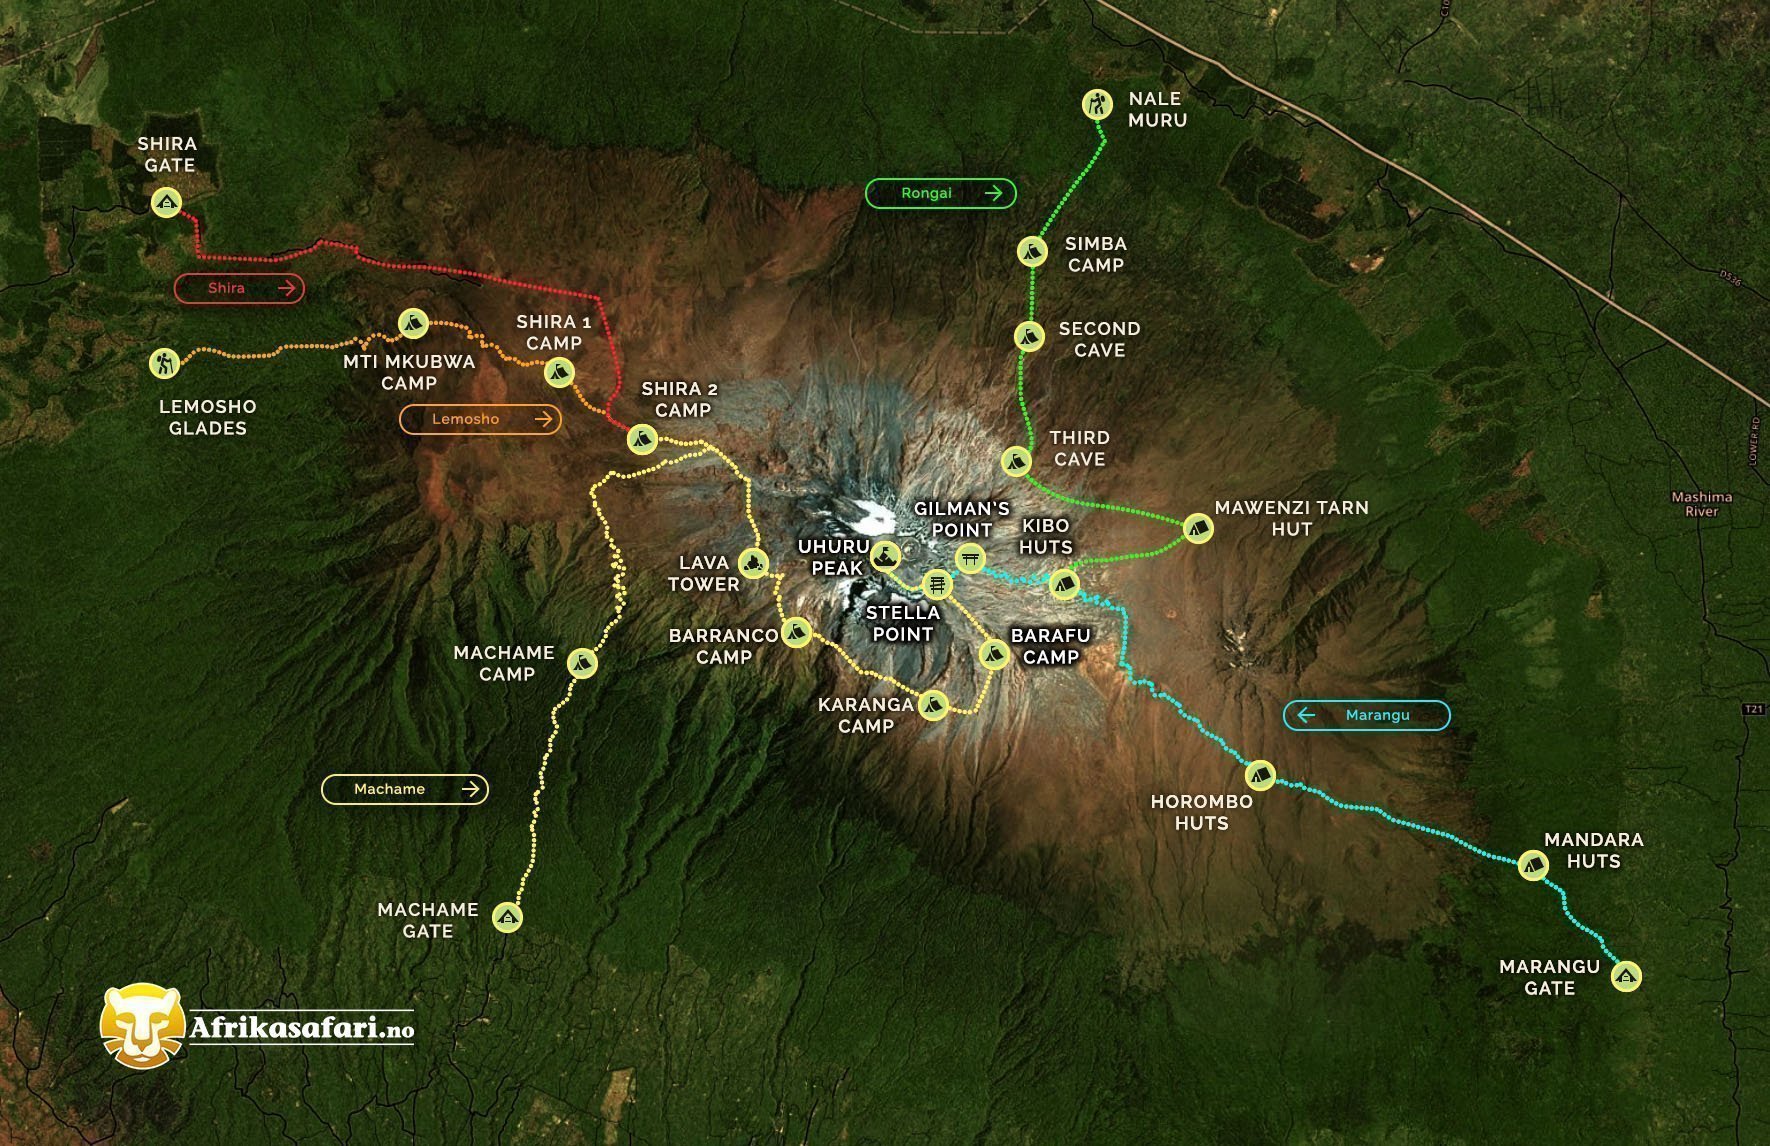 Kart over kilimanjaro ruter